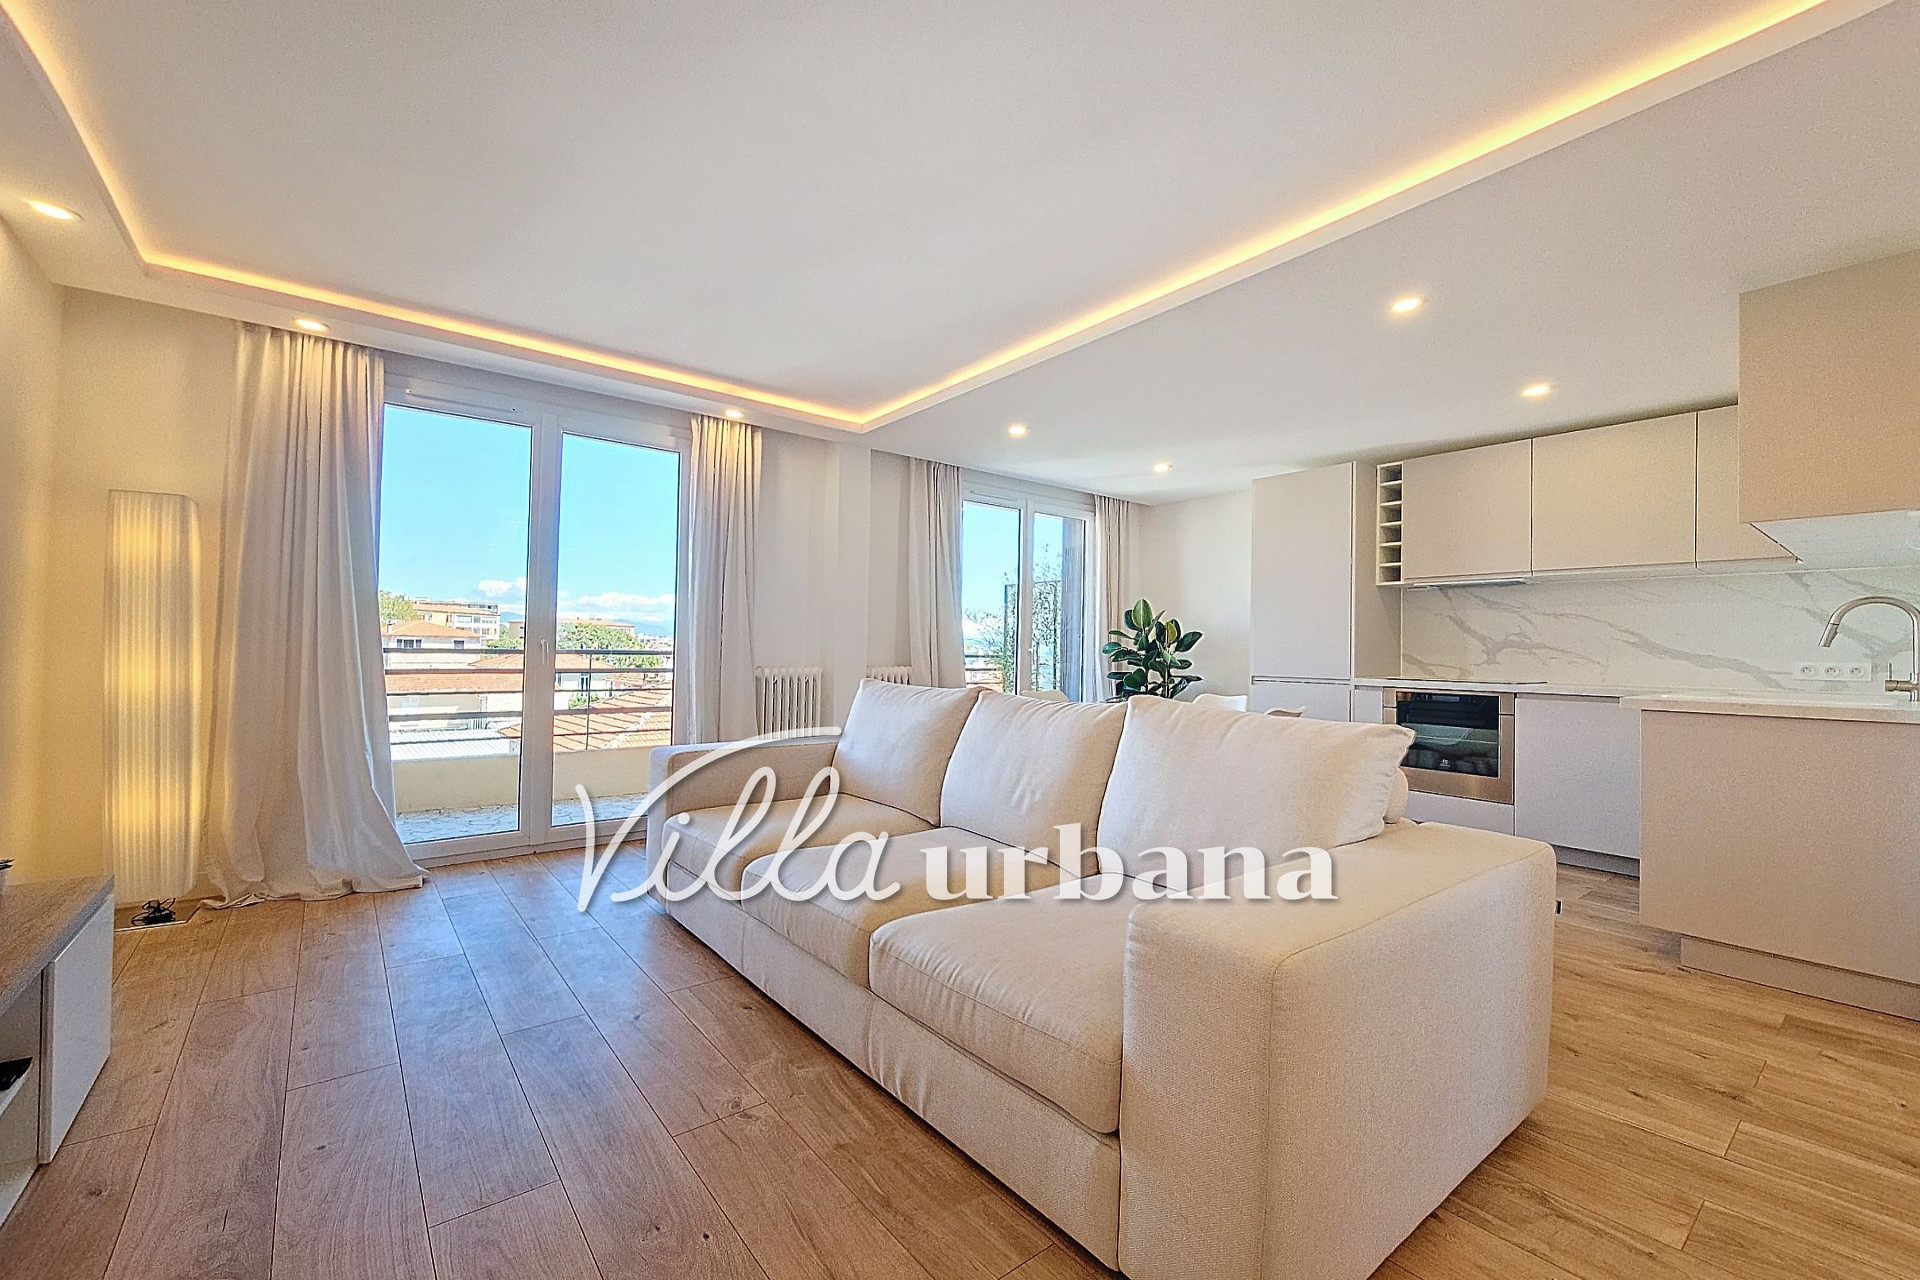 Vente Appartement 58m² à Antibes (06160) - Villa Urbana